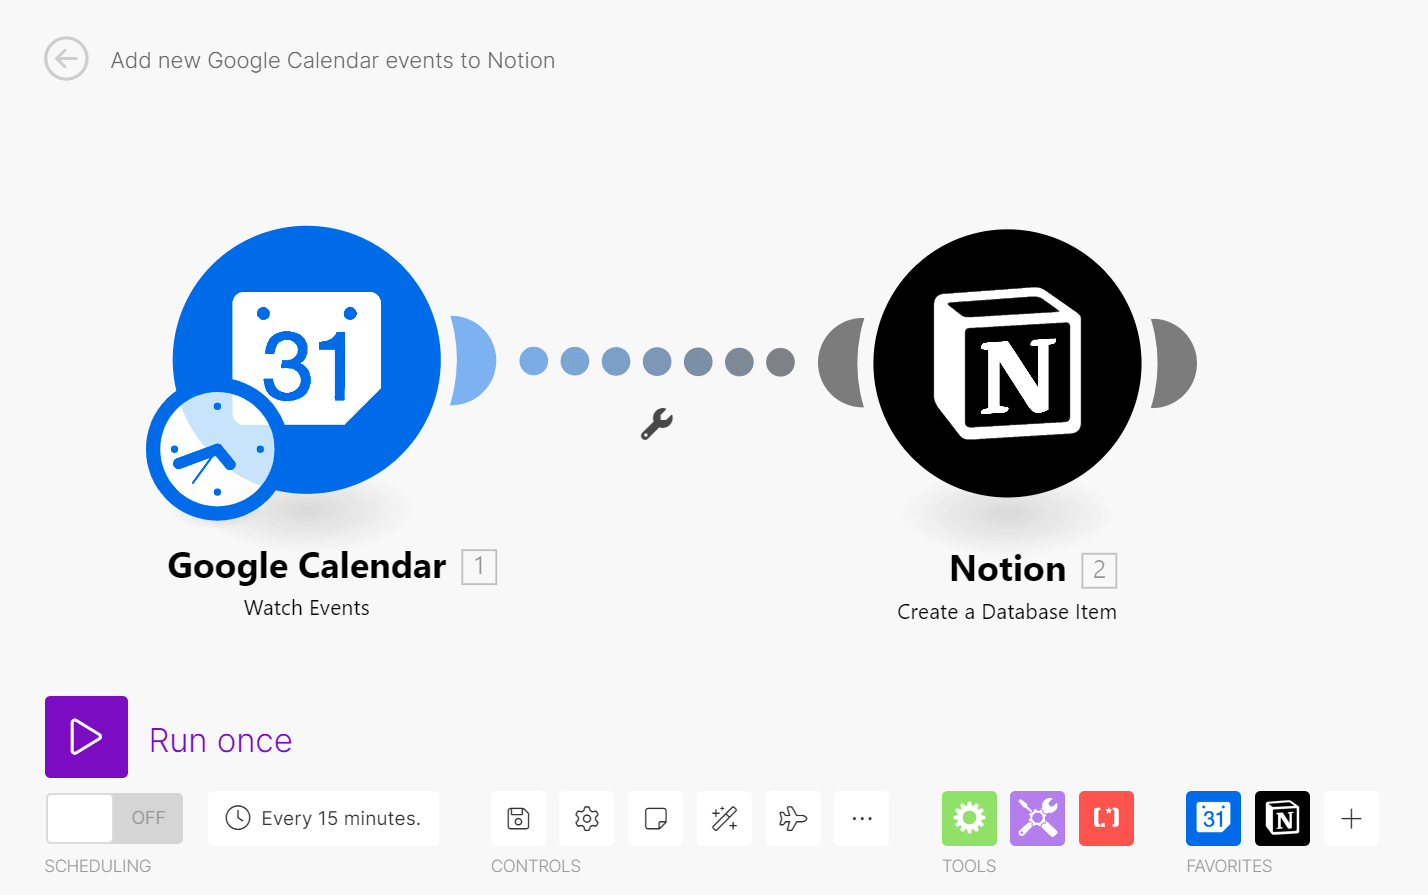 Basic Notion Google Calendar integration